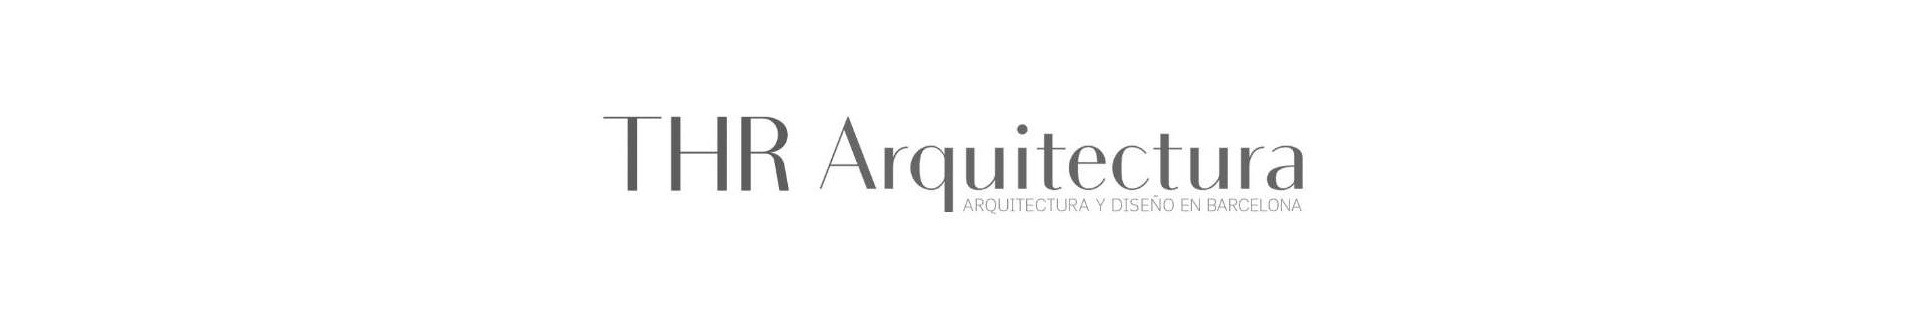 THR Arquitectura - Архитектурное бюро в Испании